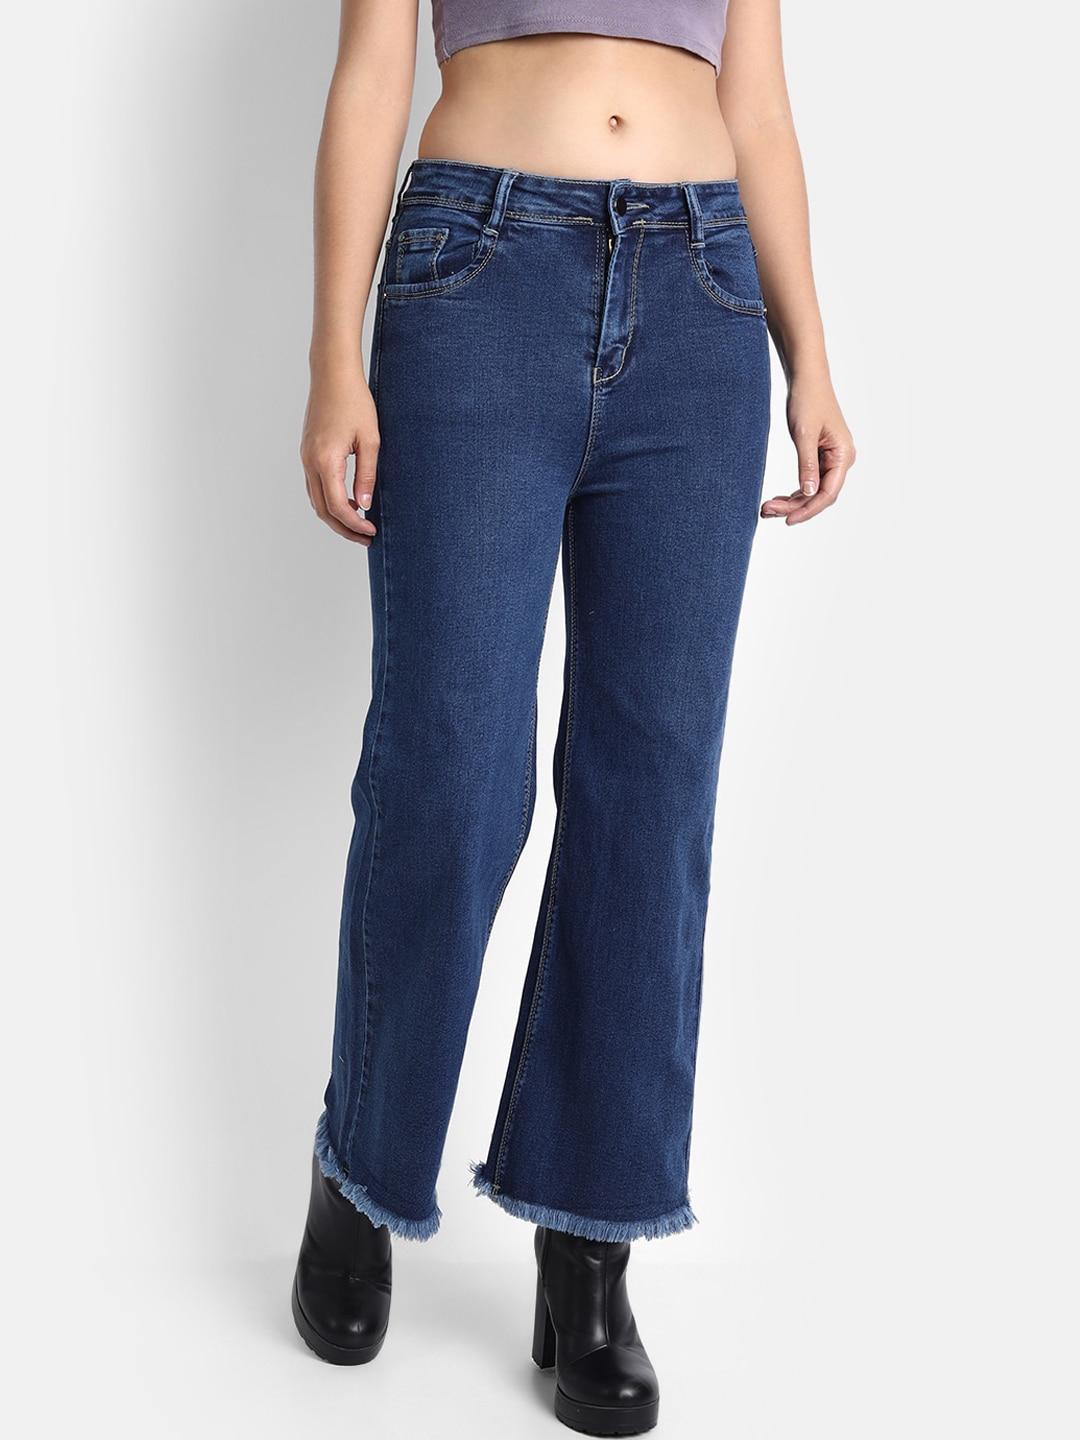 broadstar-women-navy-blue-jean-bootcut-stretchable-jeans